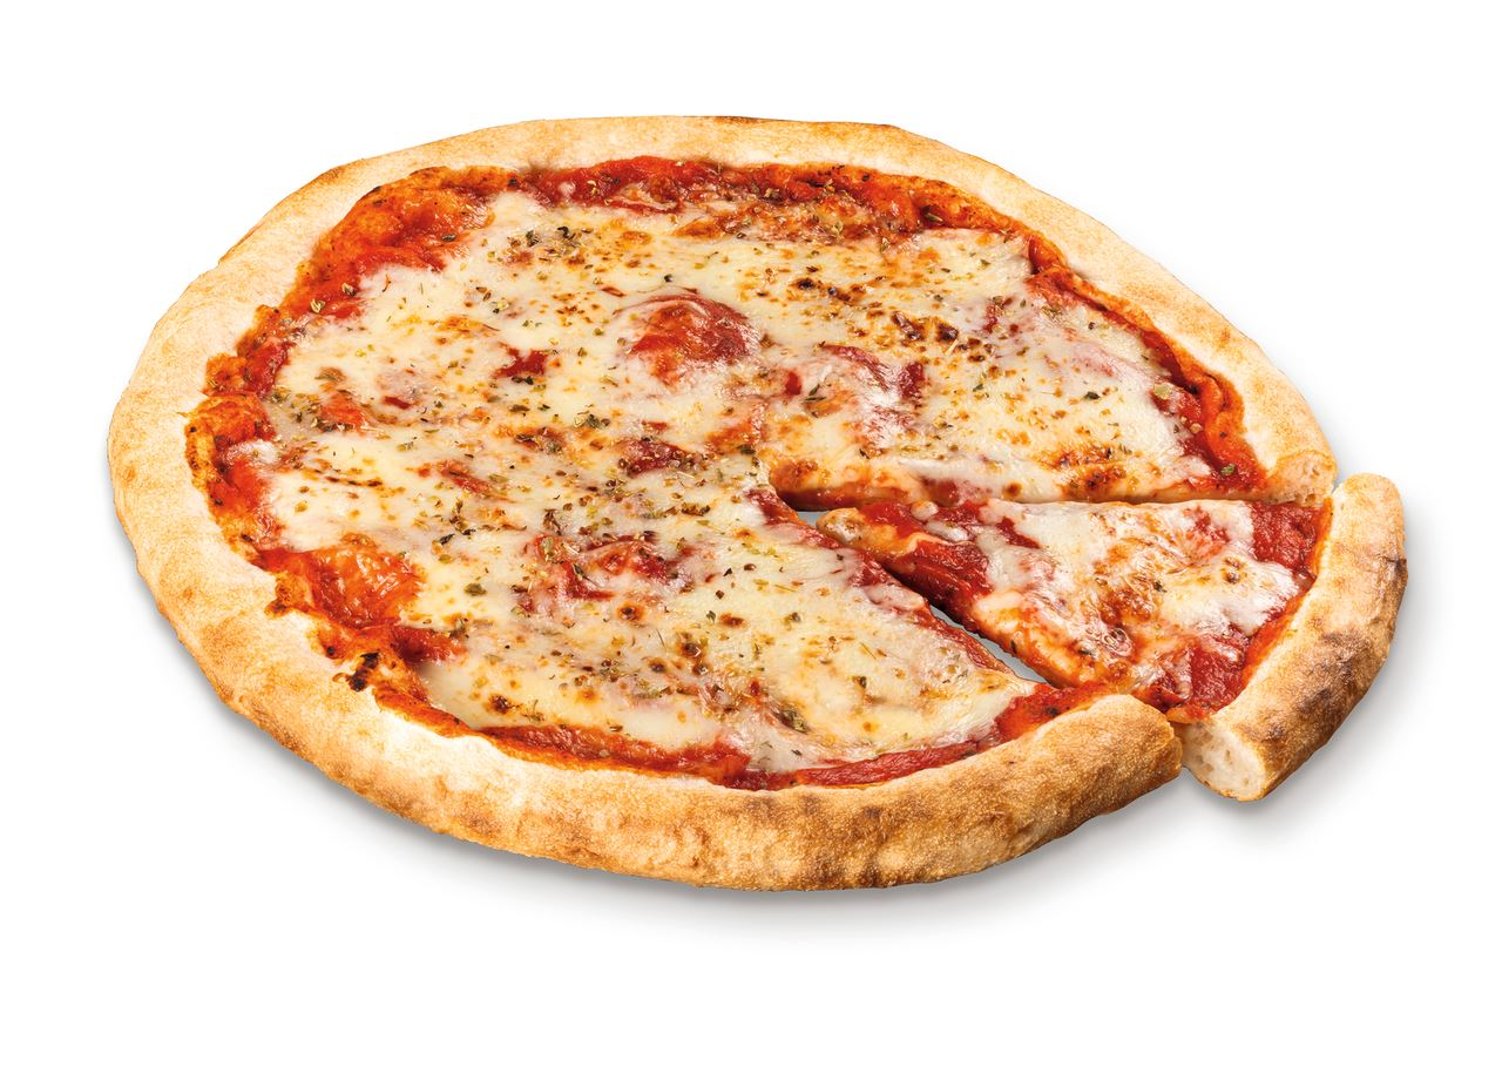 Dr. Oetker Professional - Pizza Perfettissima Margherita, tiefgefroren, 6 Stück à 365 g - 2,19 kg Karton